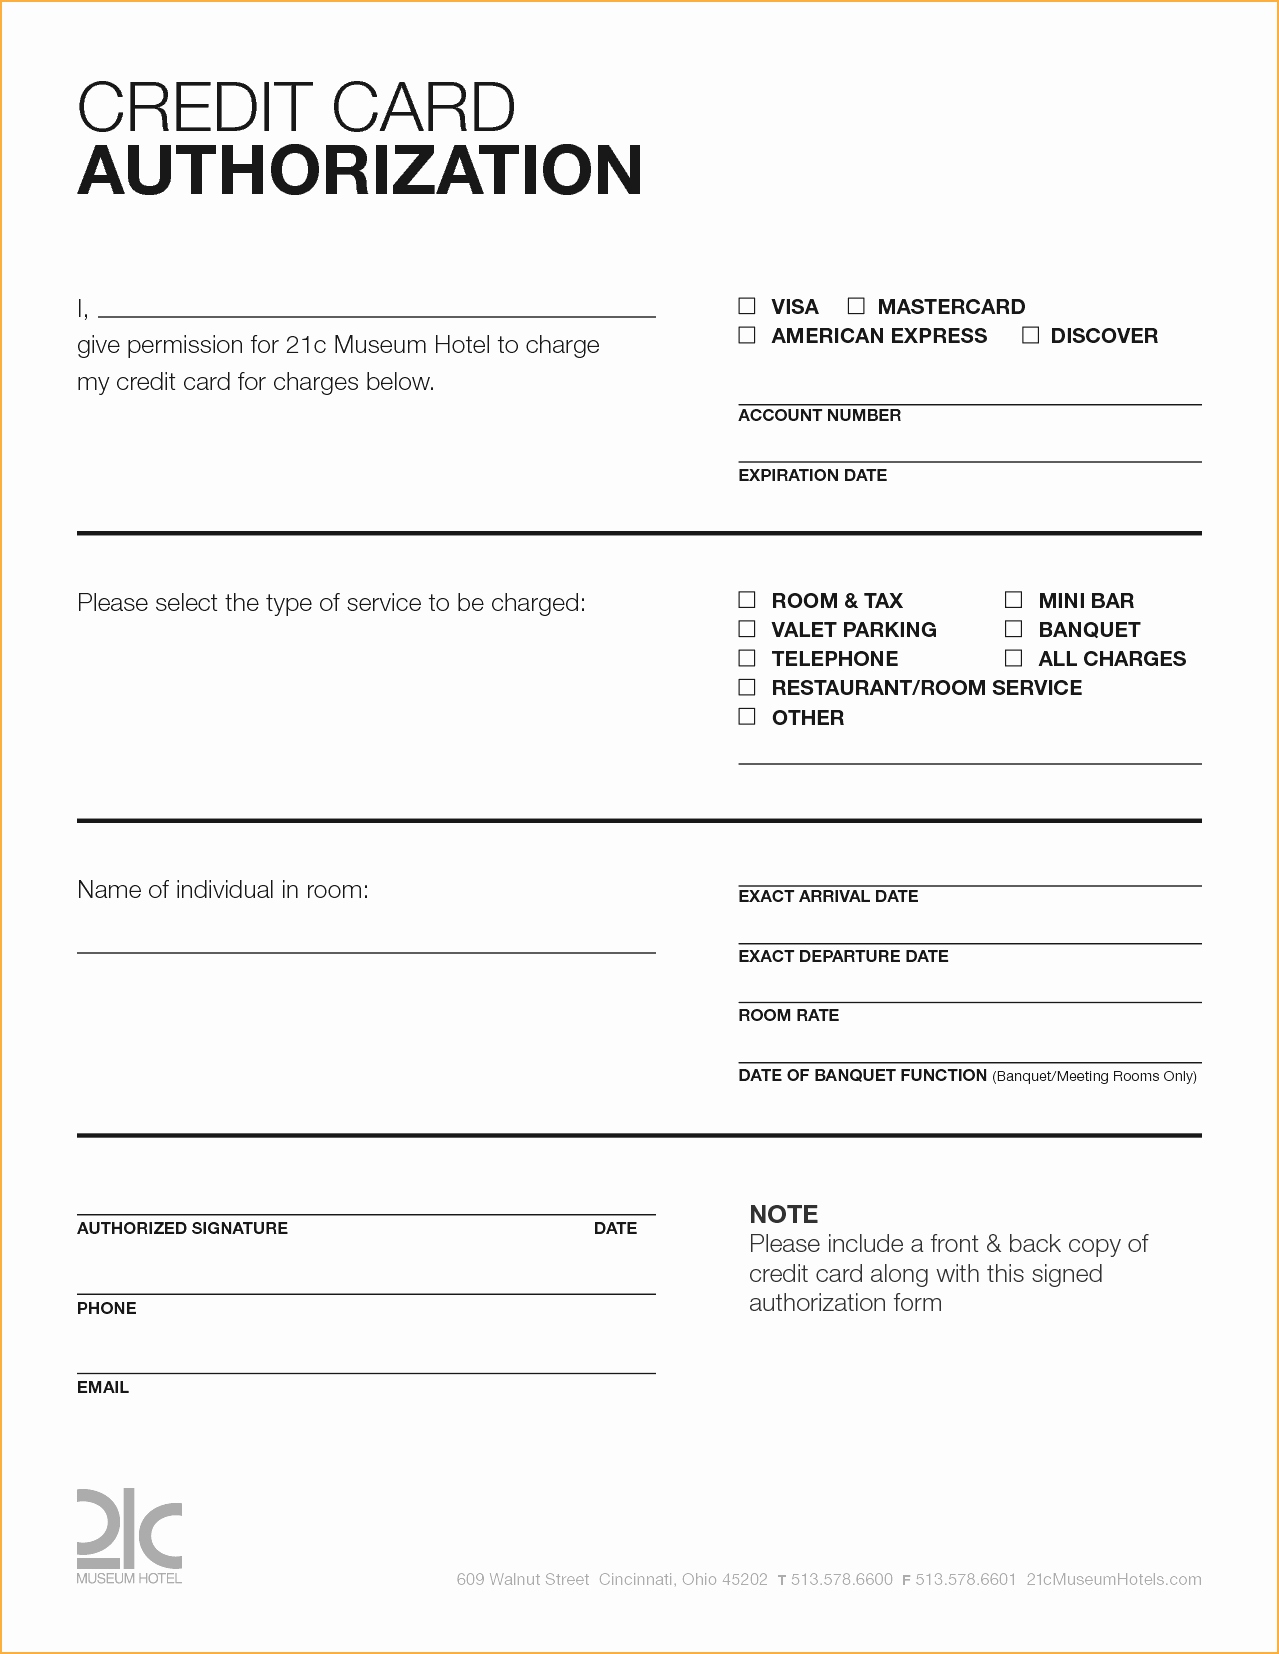 Cc Authorization Form Template